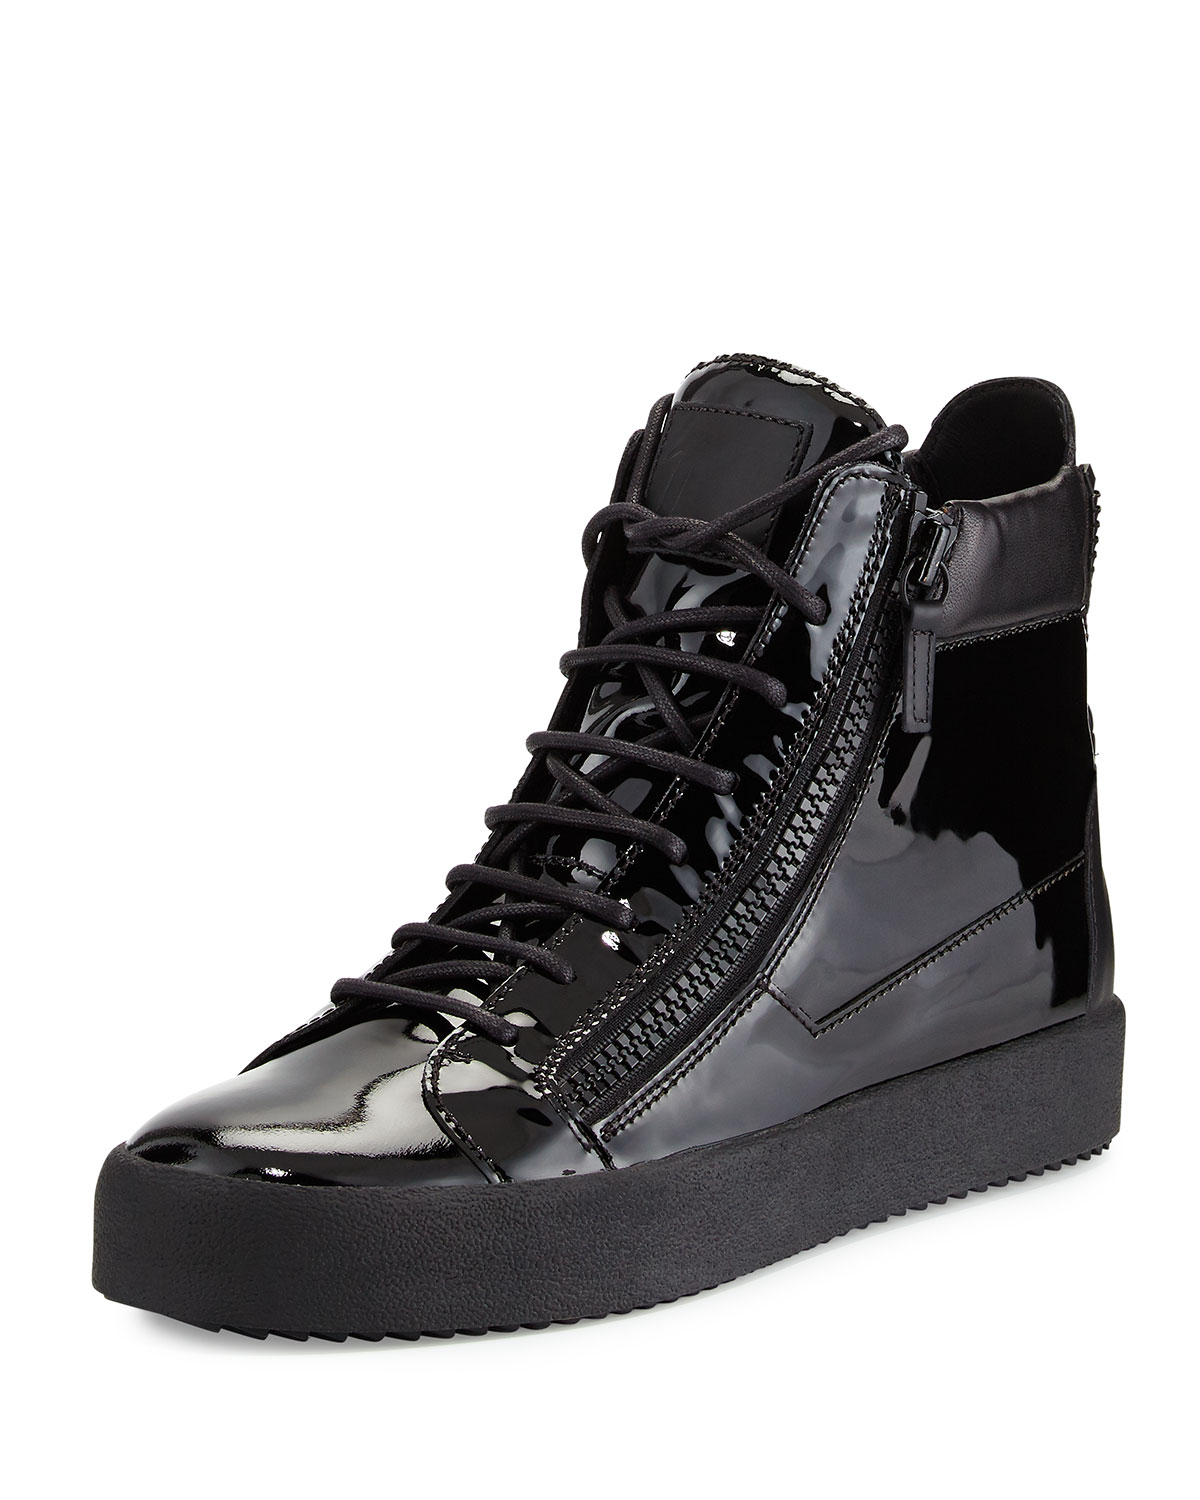 Giuseppe zanotti Men's Patent Leather High-top Sneaker in Black | Lyst